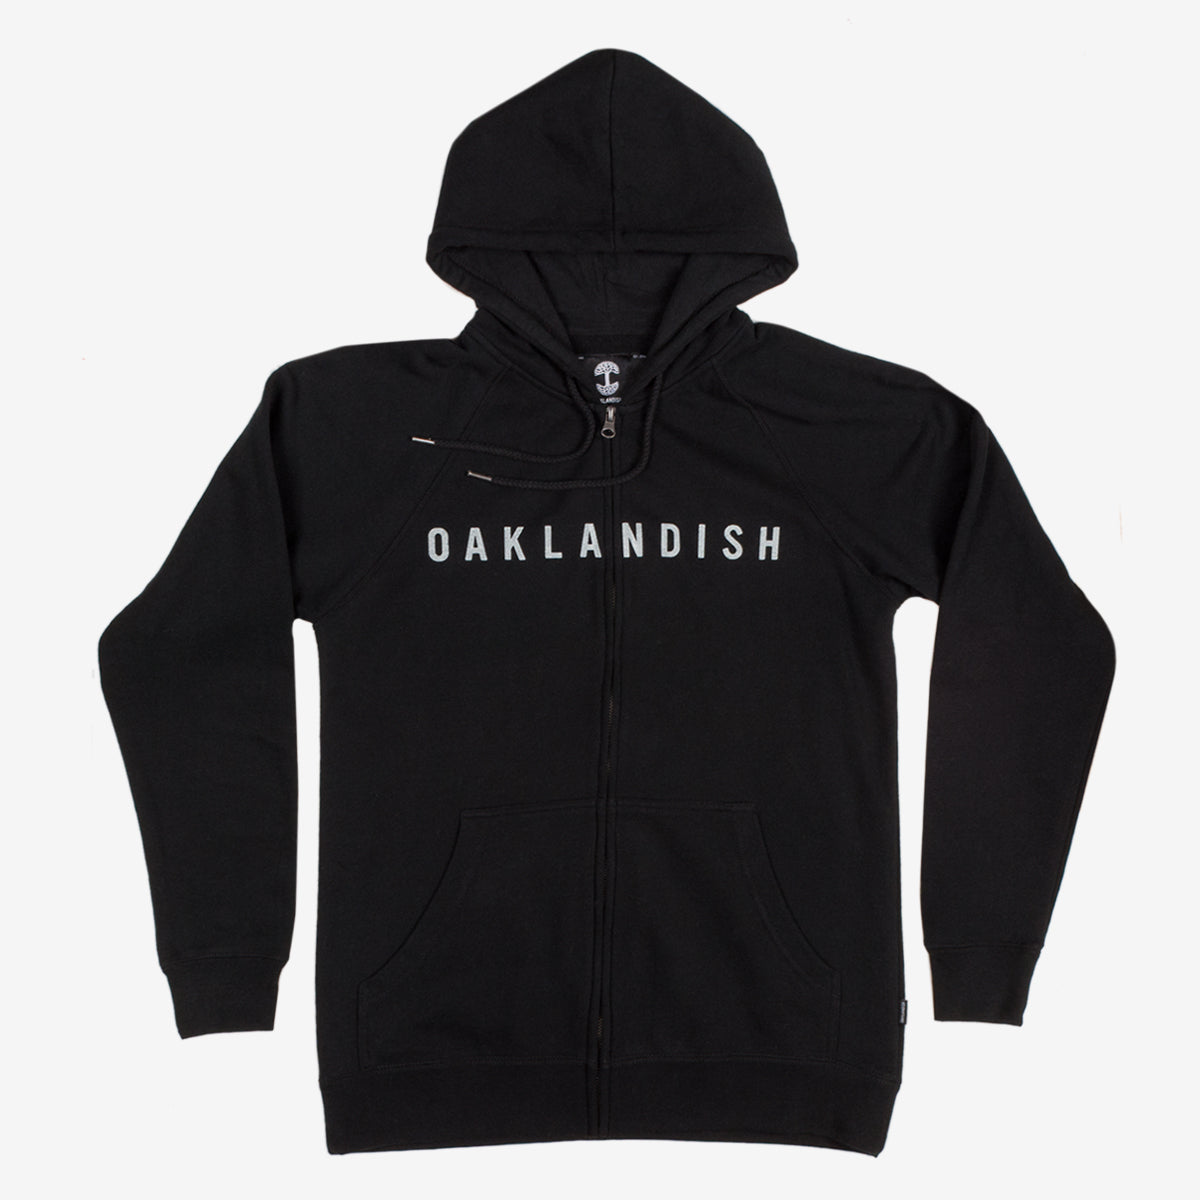 Black zip-up hooded sweatshirt with white Oaklandish wordmark on the chest.